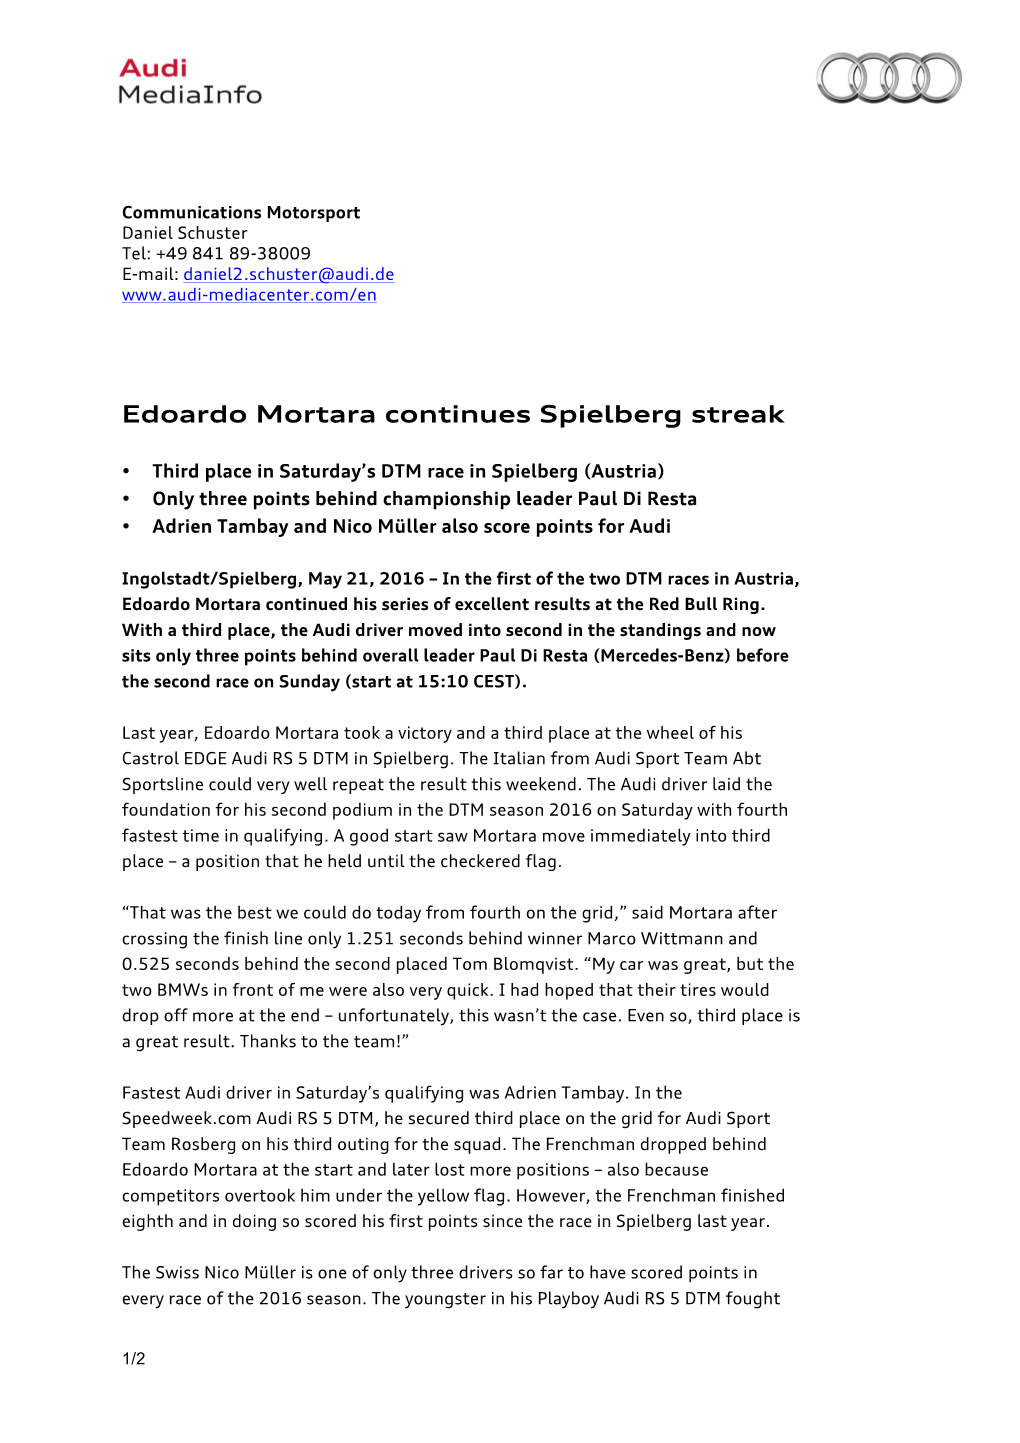 Edoardo Mortara Continues Spielberg Streak